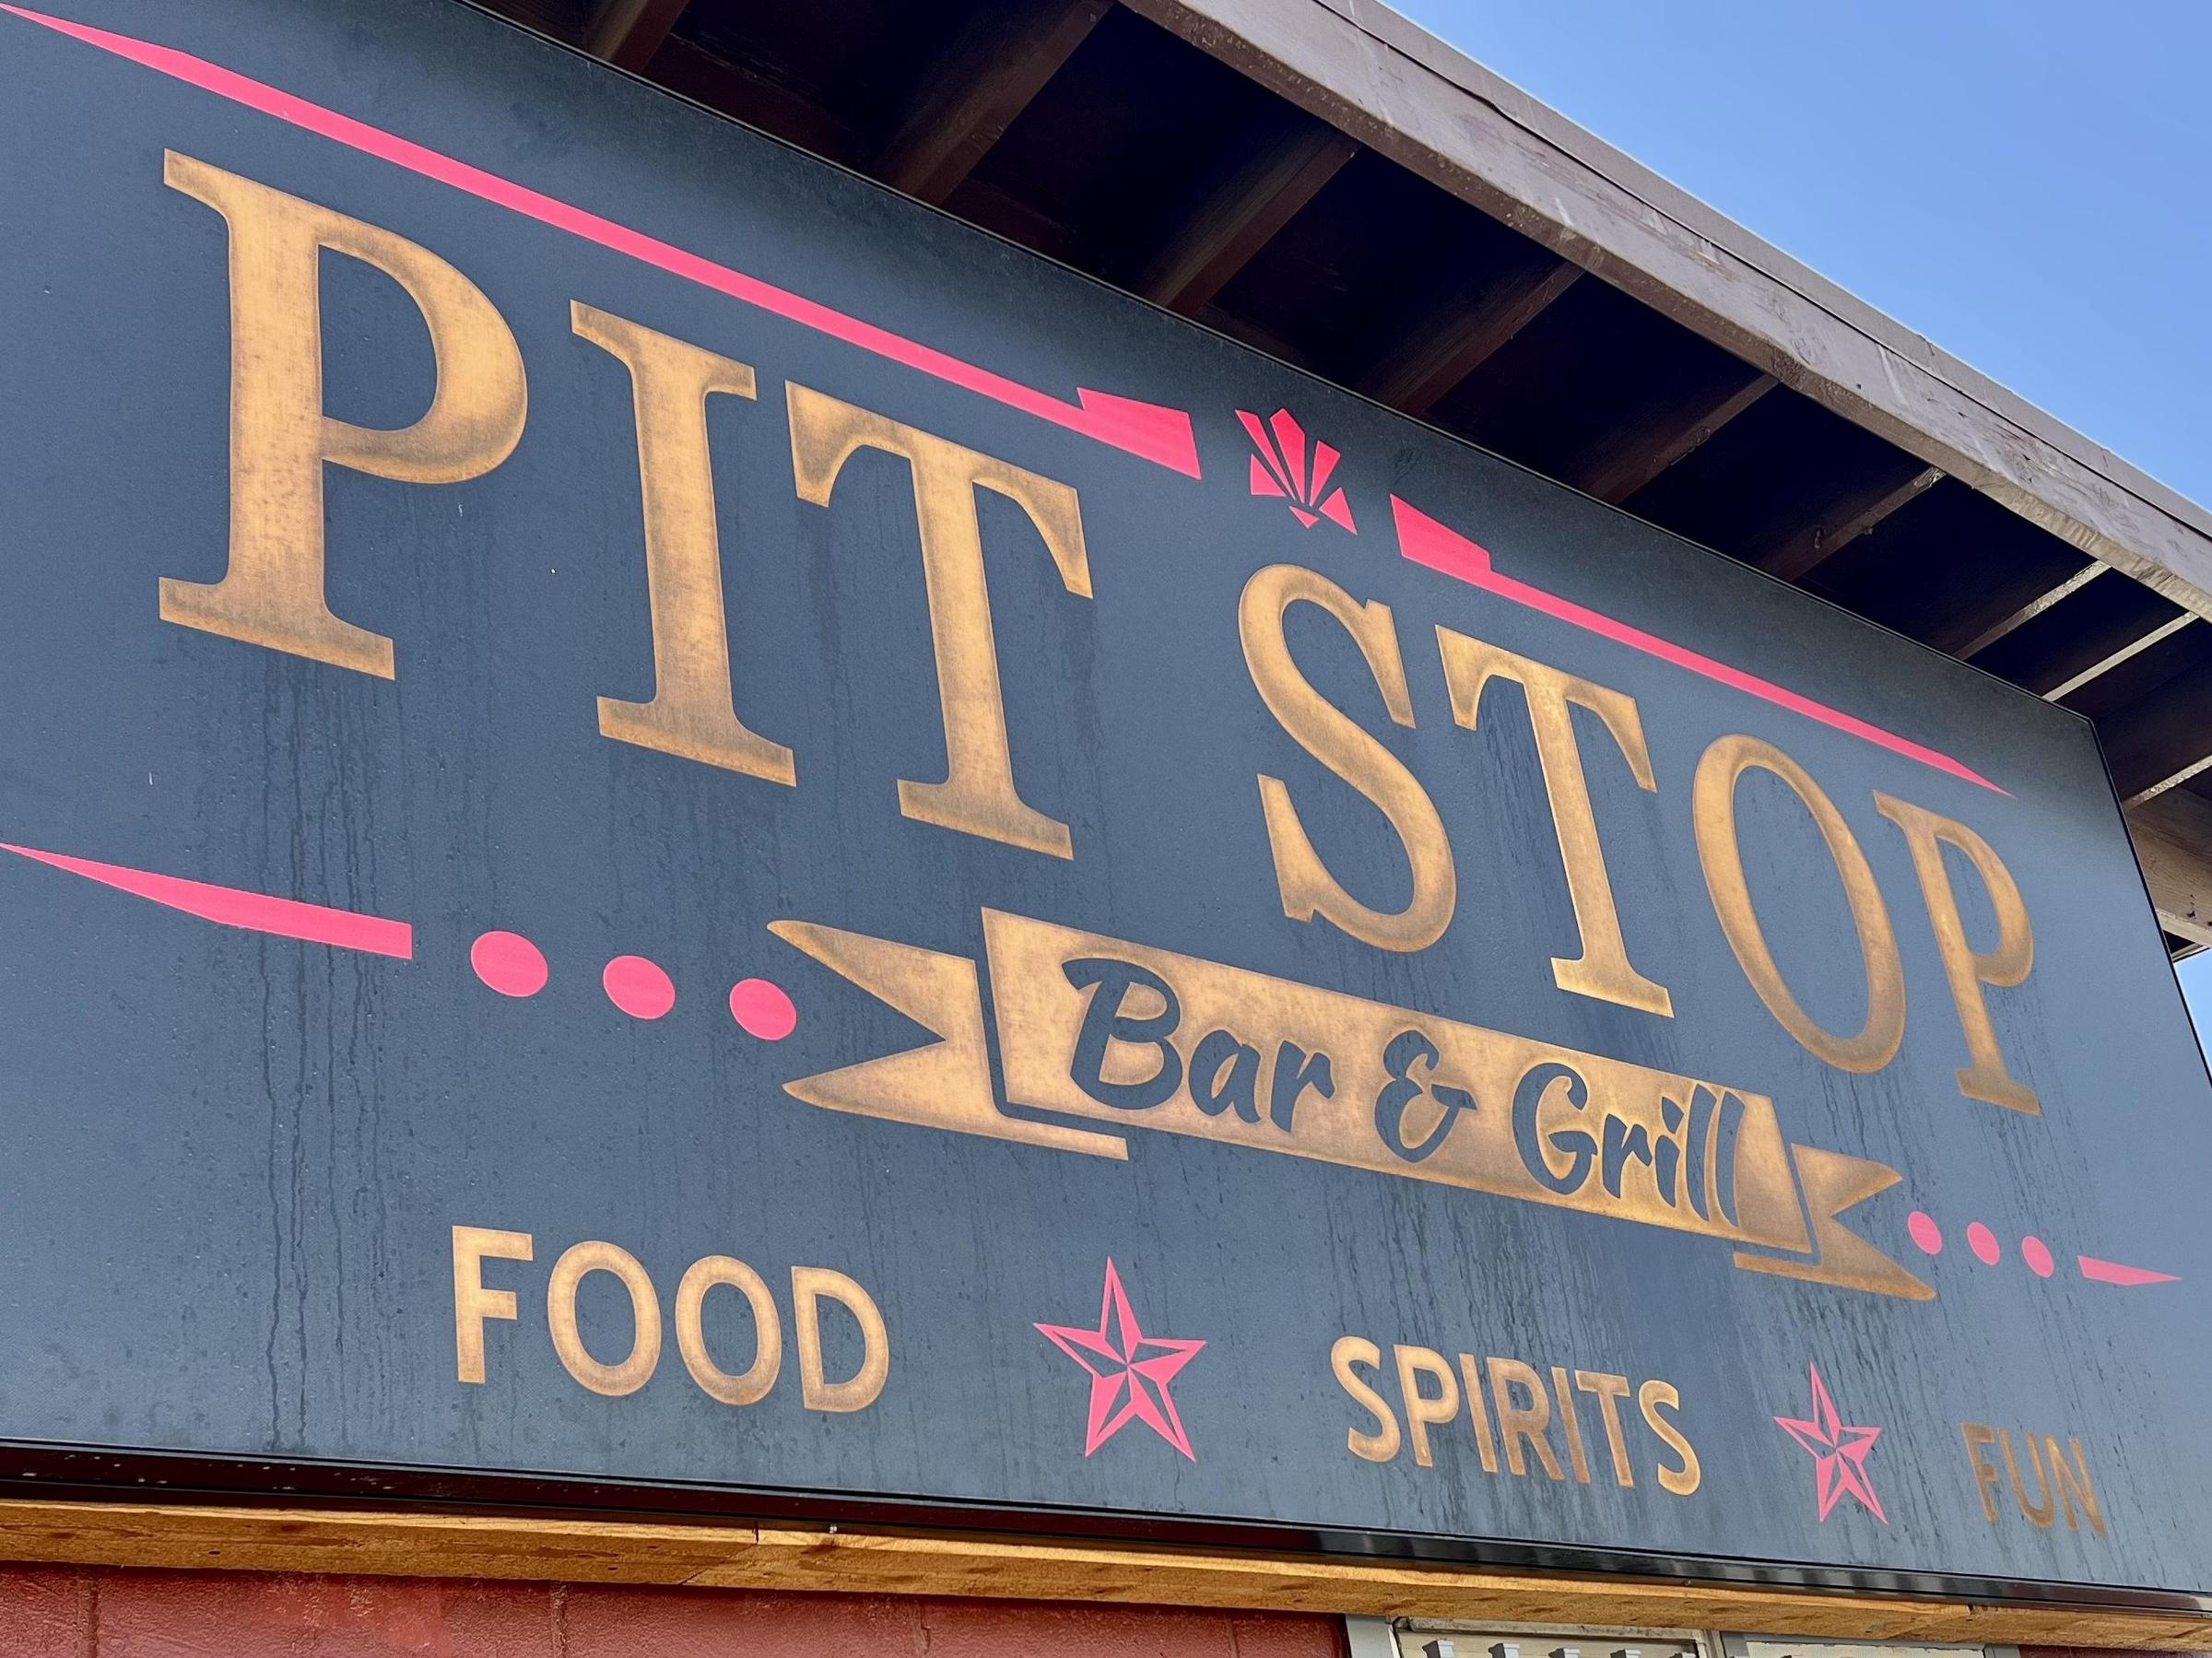 Pet Friendly Pit Stop Bar & Grill